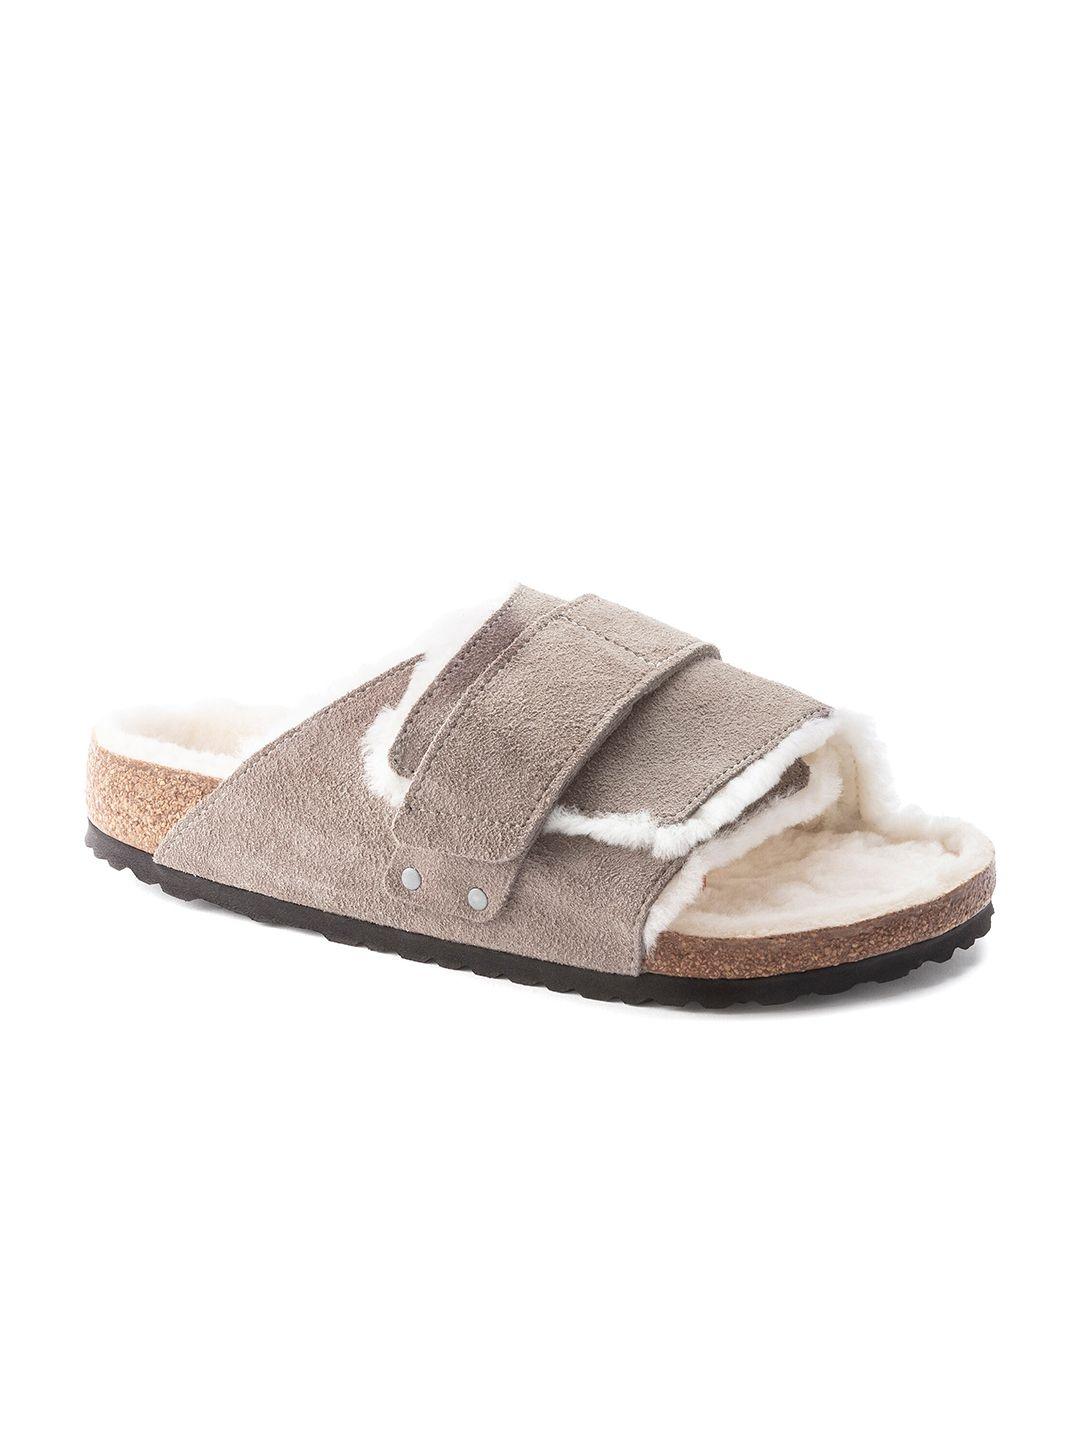 birkenstock men kyoto shearling regular width one-strap comfort sandals